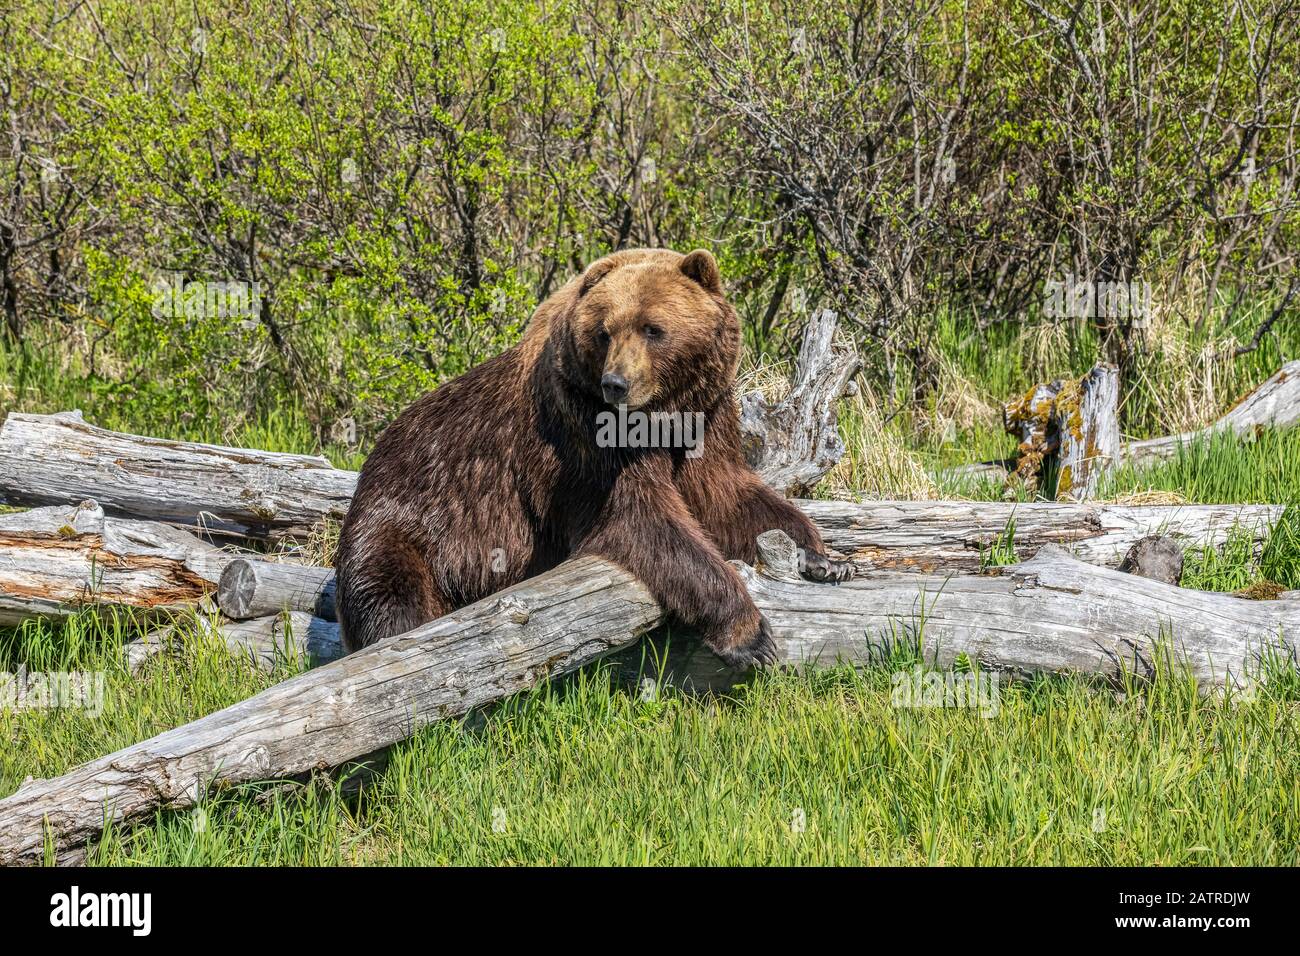 Brown bear boar (Ursus arctos) looking at camera while resting over a log, Alaska Wildlife Conservation Center, South-central Alaska Stock Photo